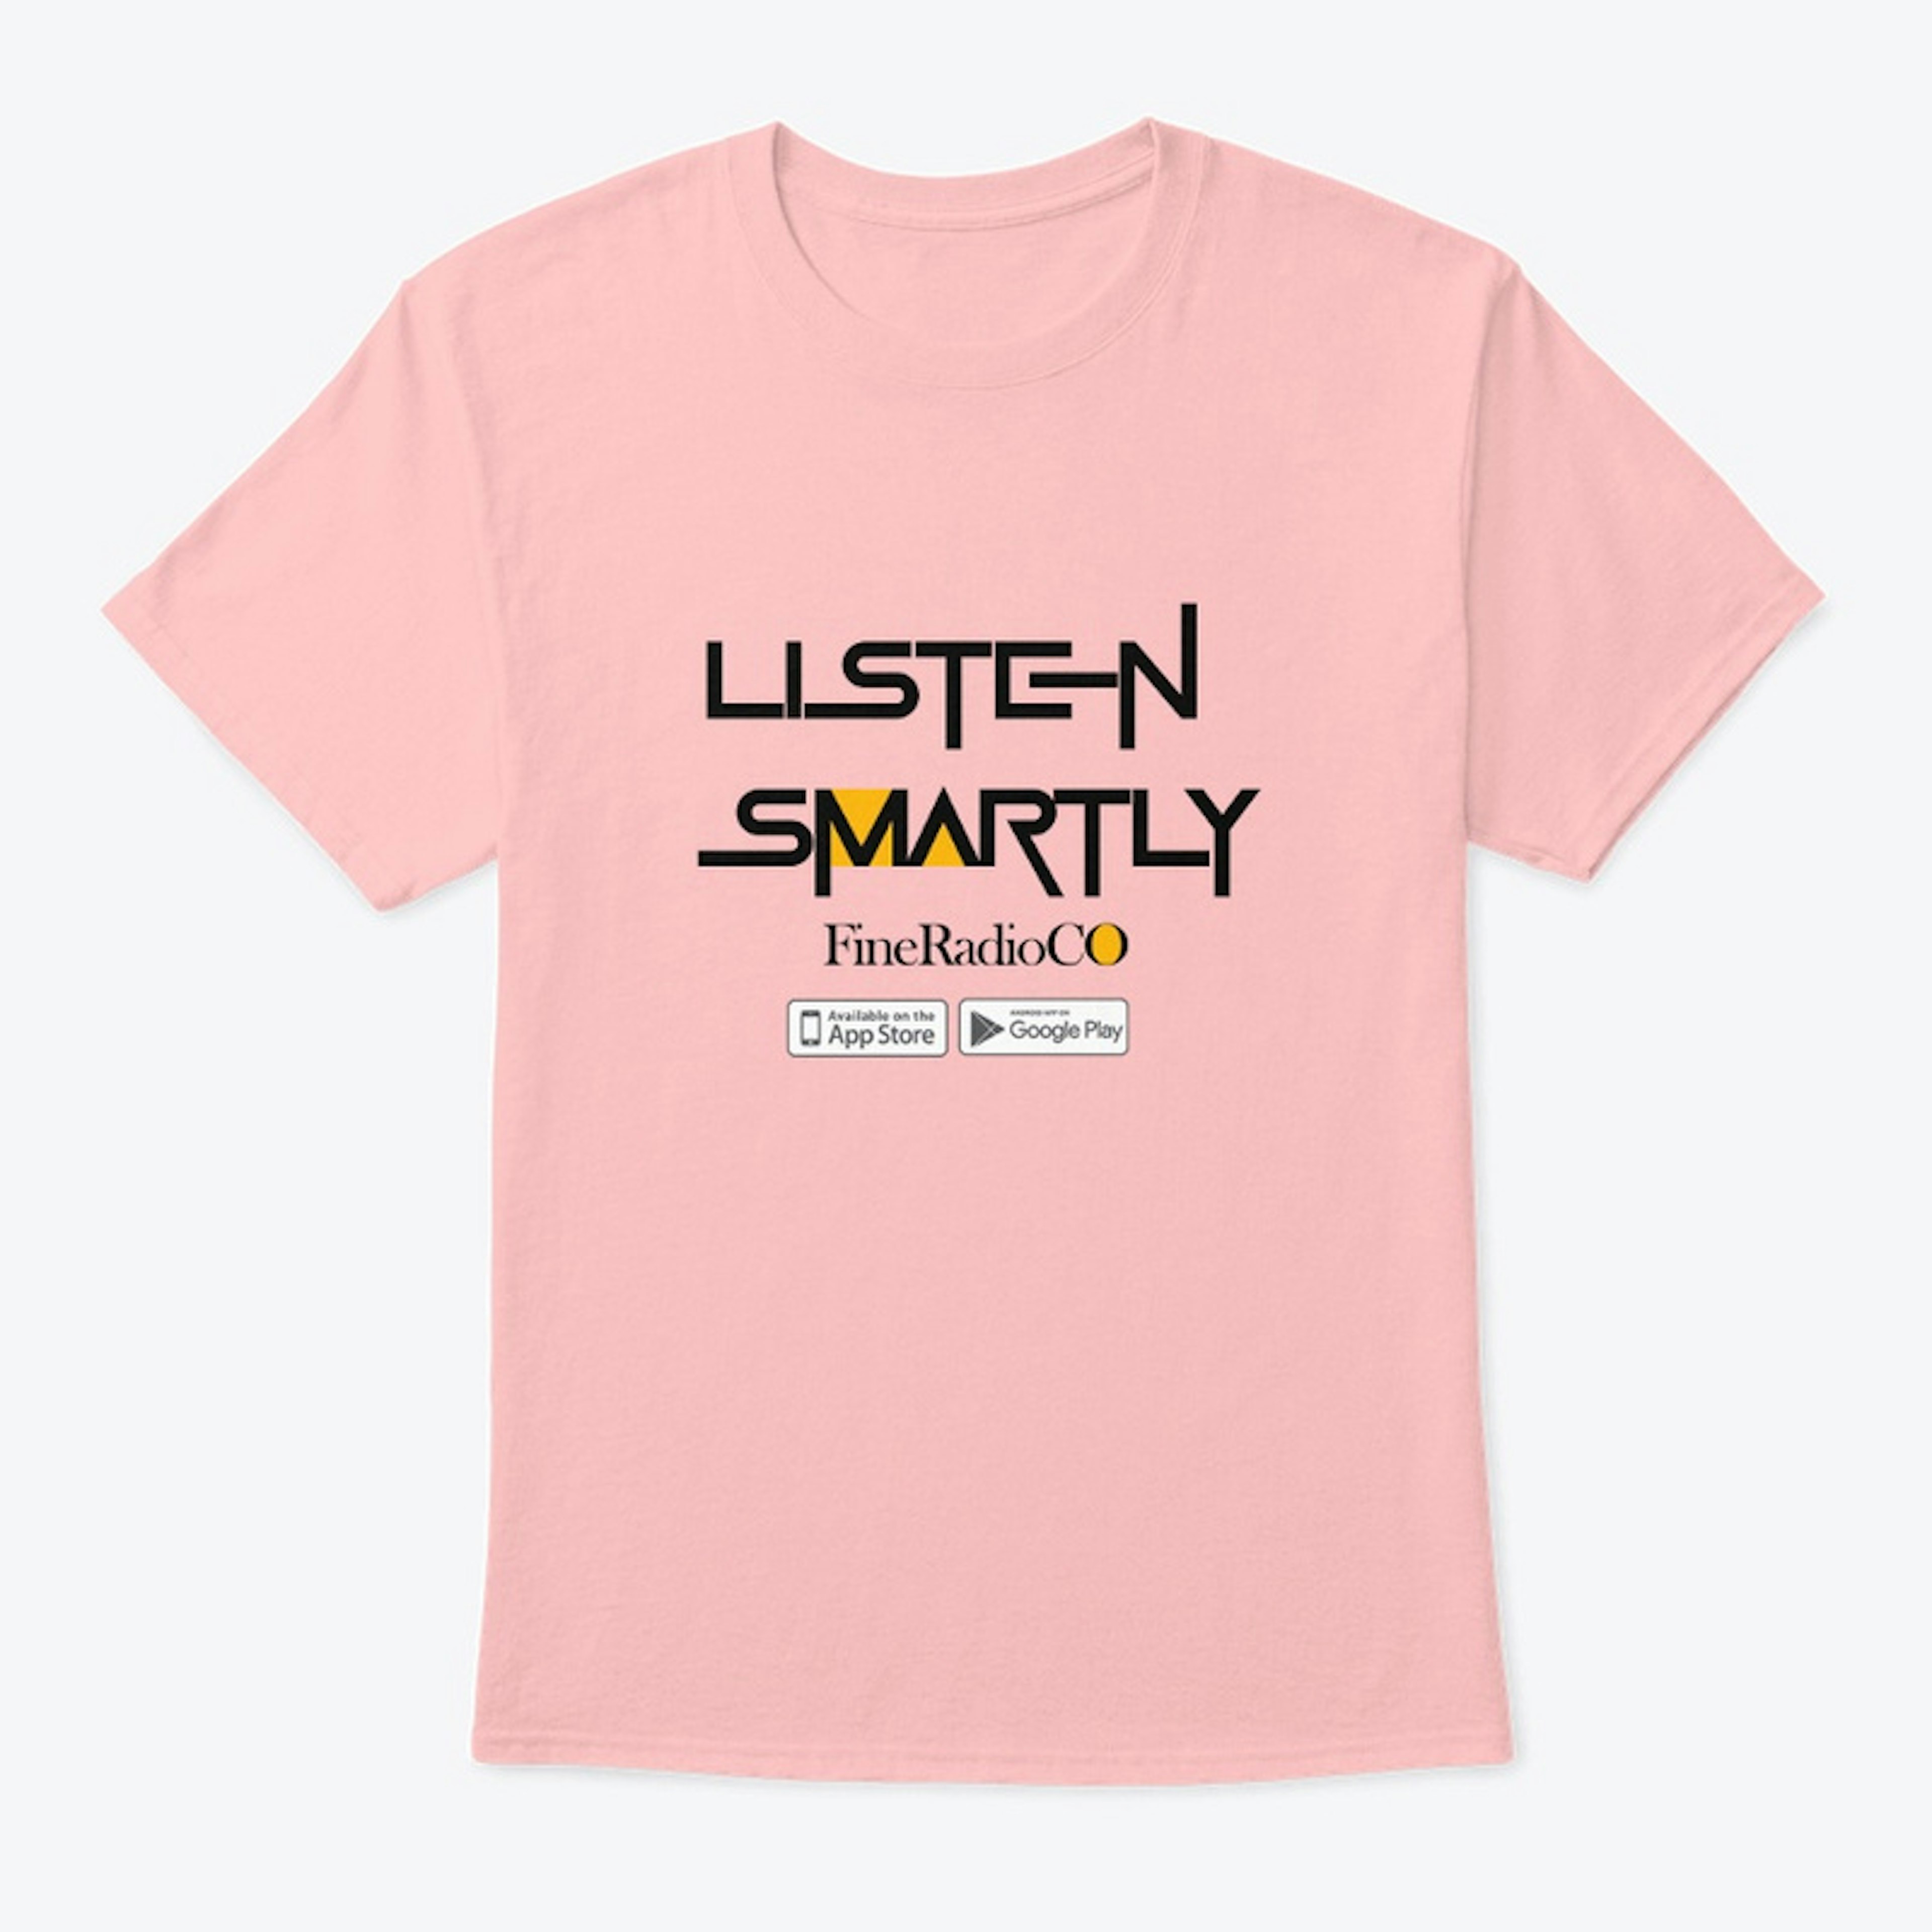 Listen Smartly